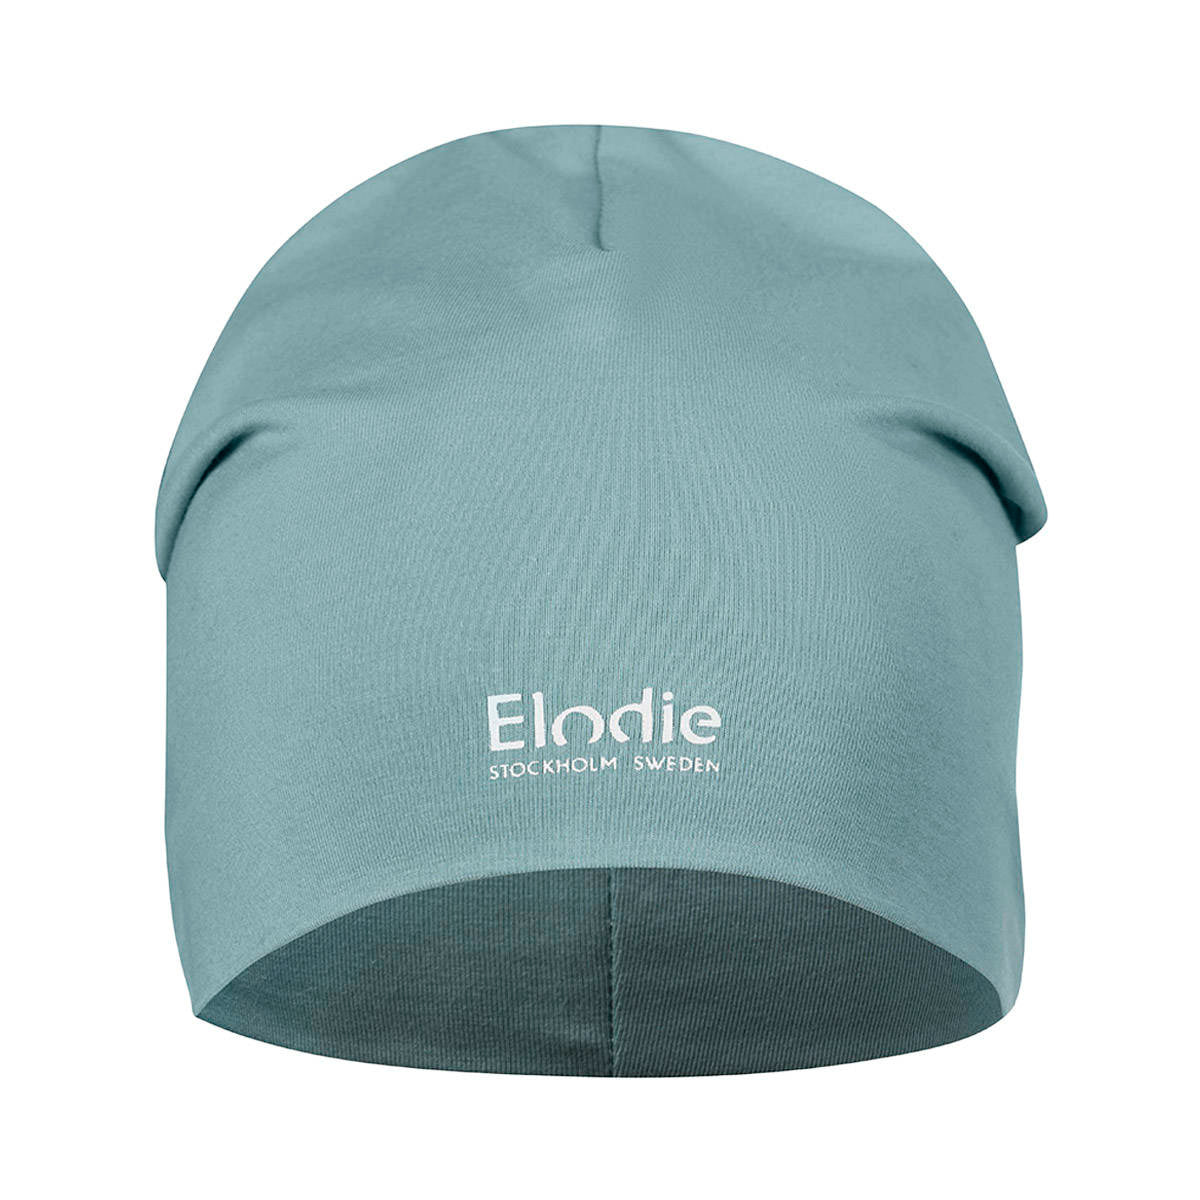 Detalles de Elodie - Cap - Aqua Turquoise 6-12 meses